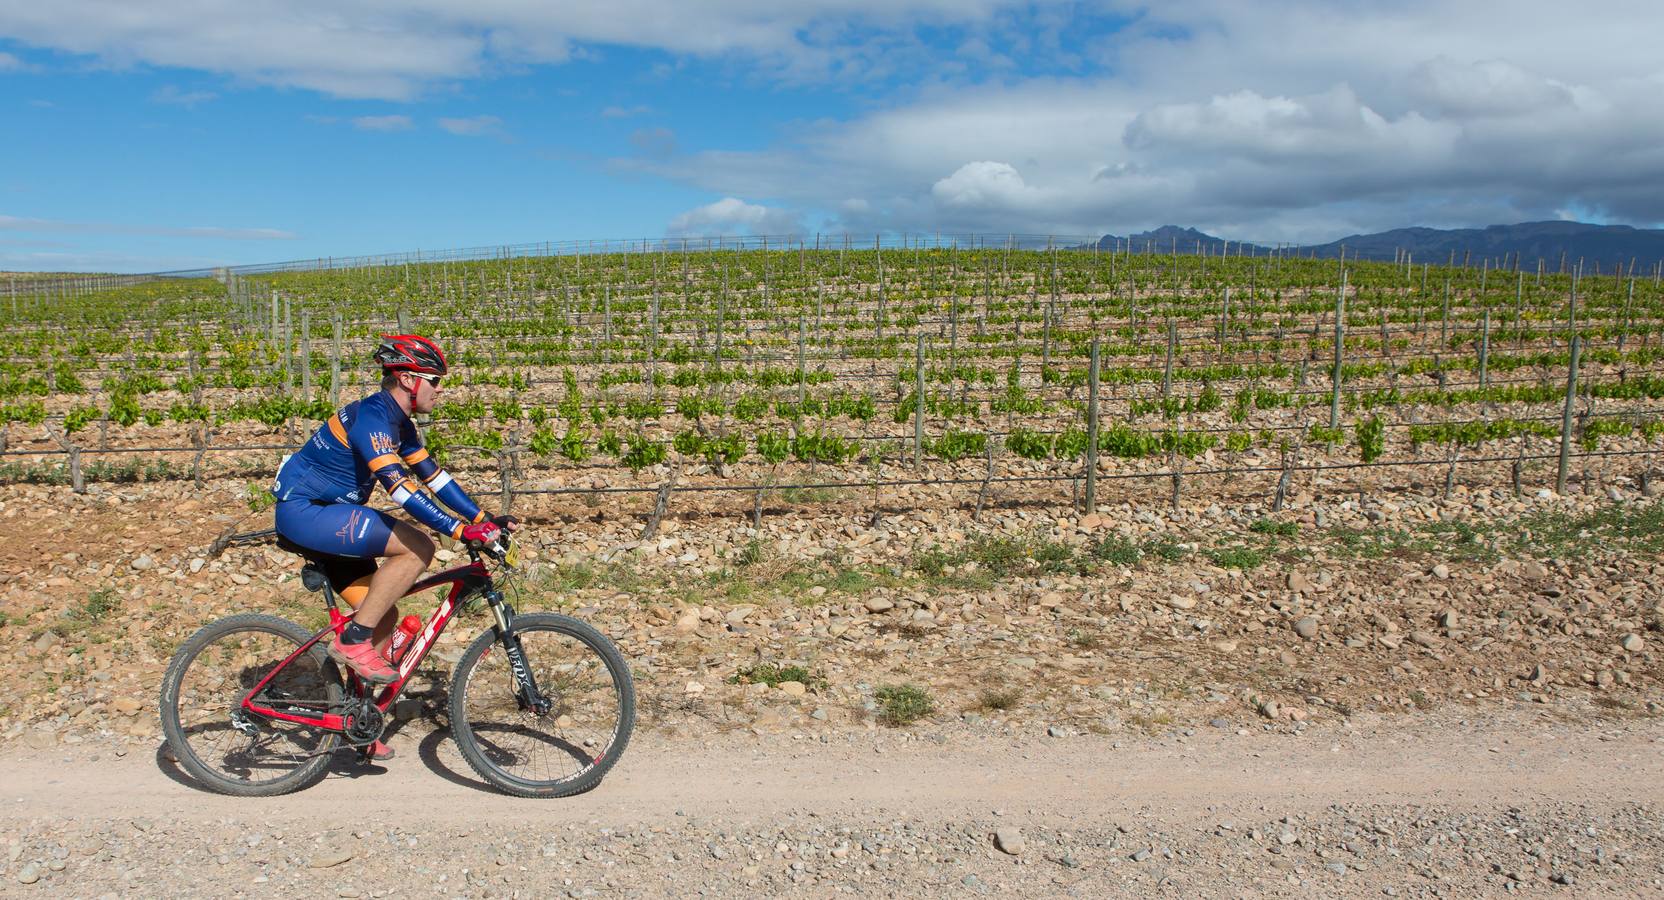 Fotos: La Rioja Bike Race - Tercera etapa: El paso por el meandro de Mantible